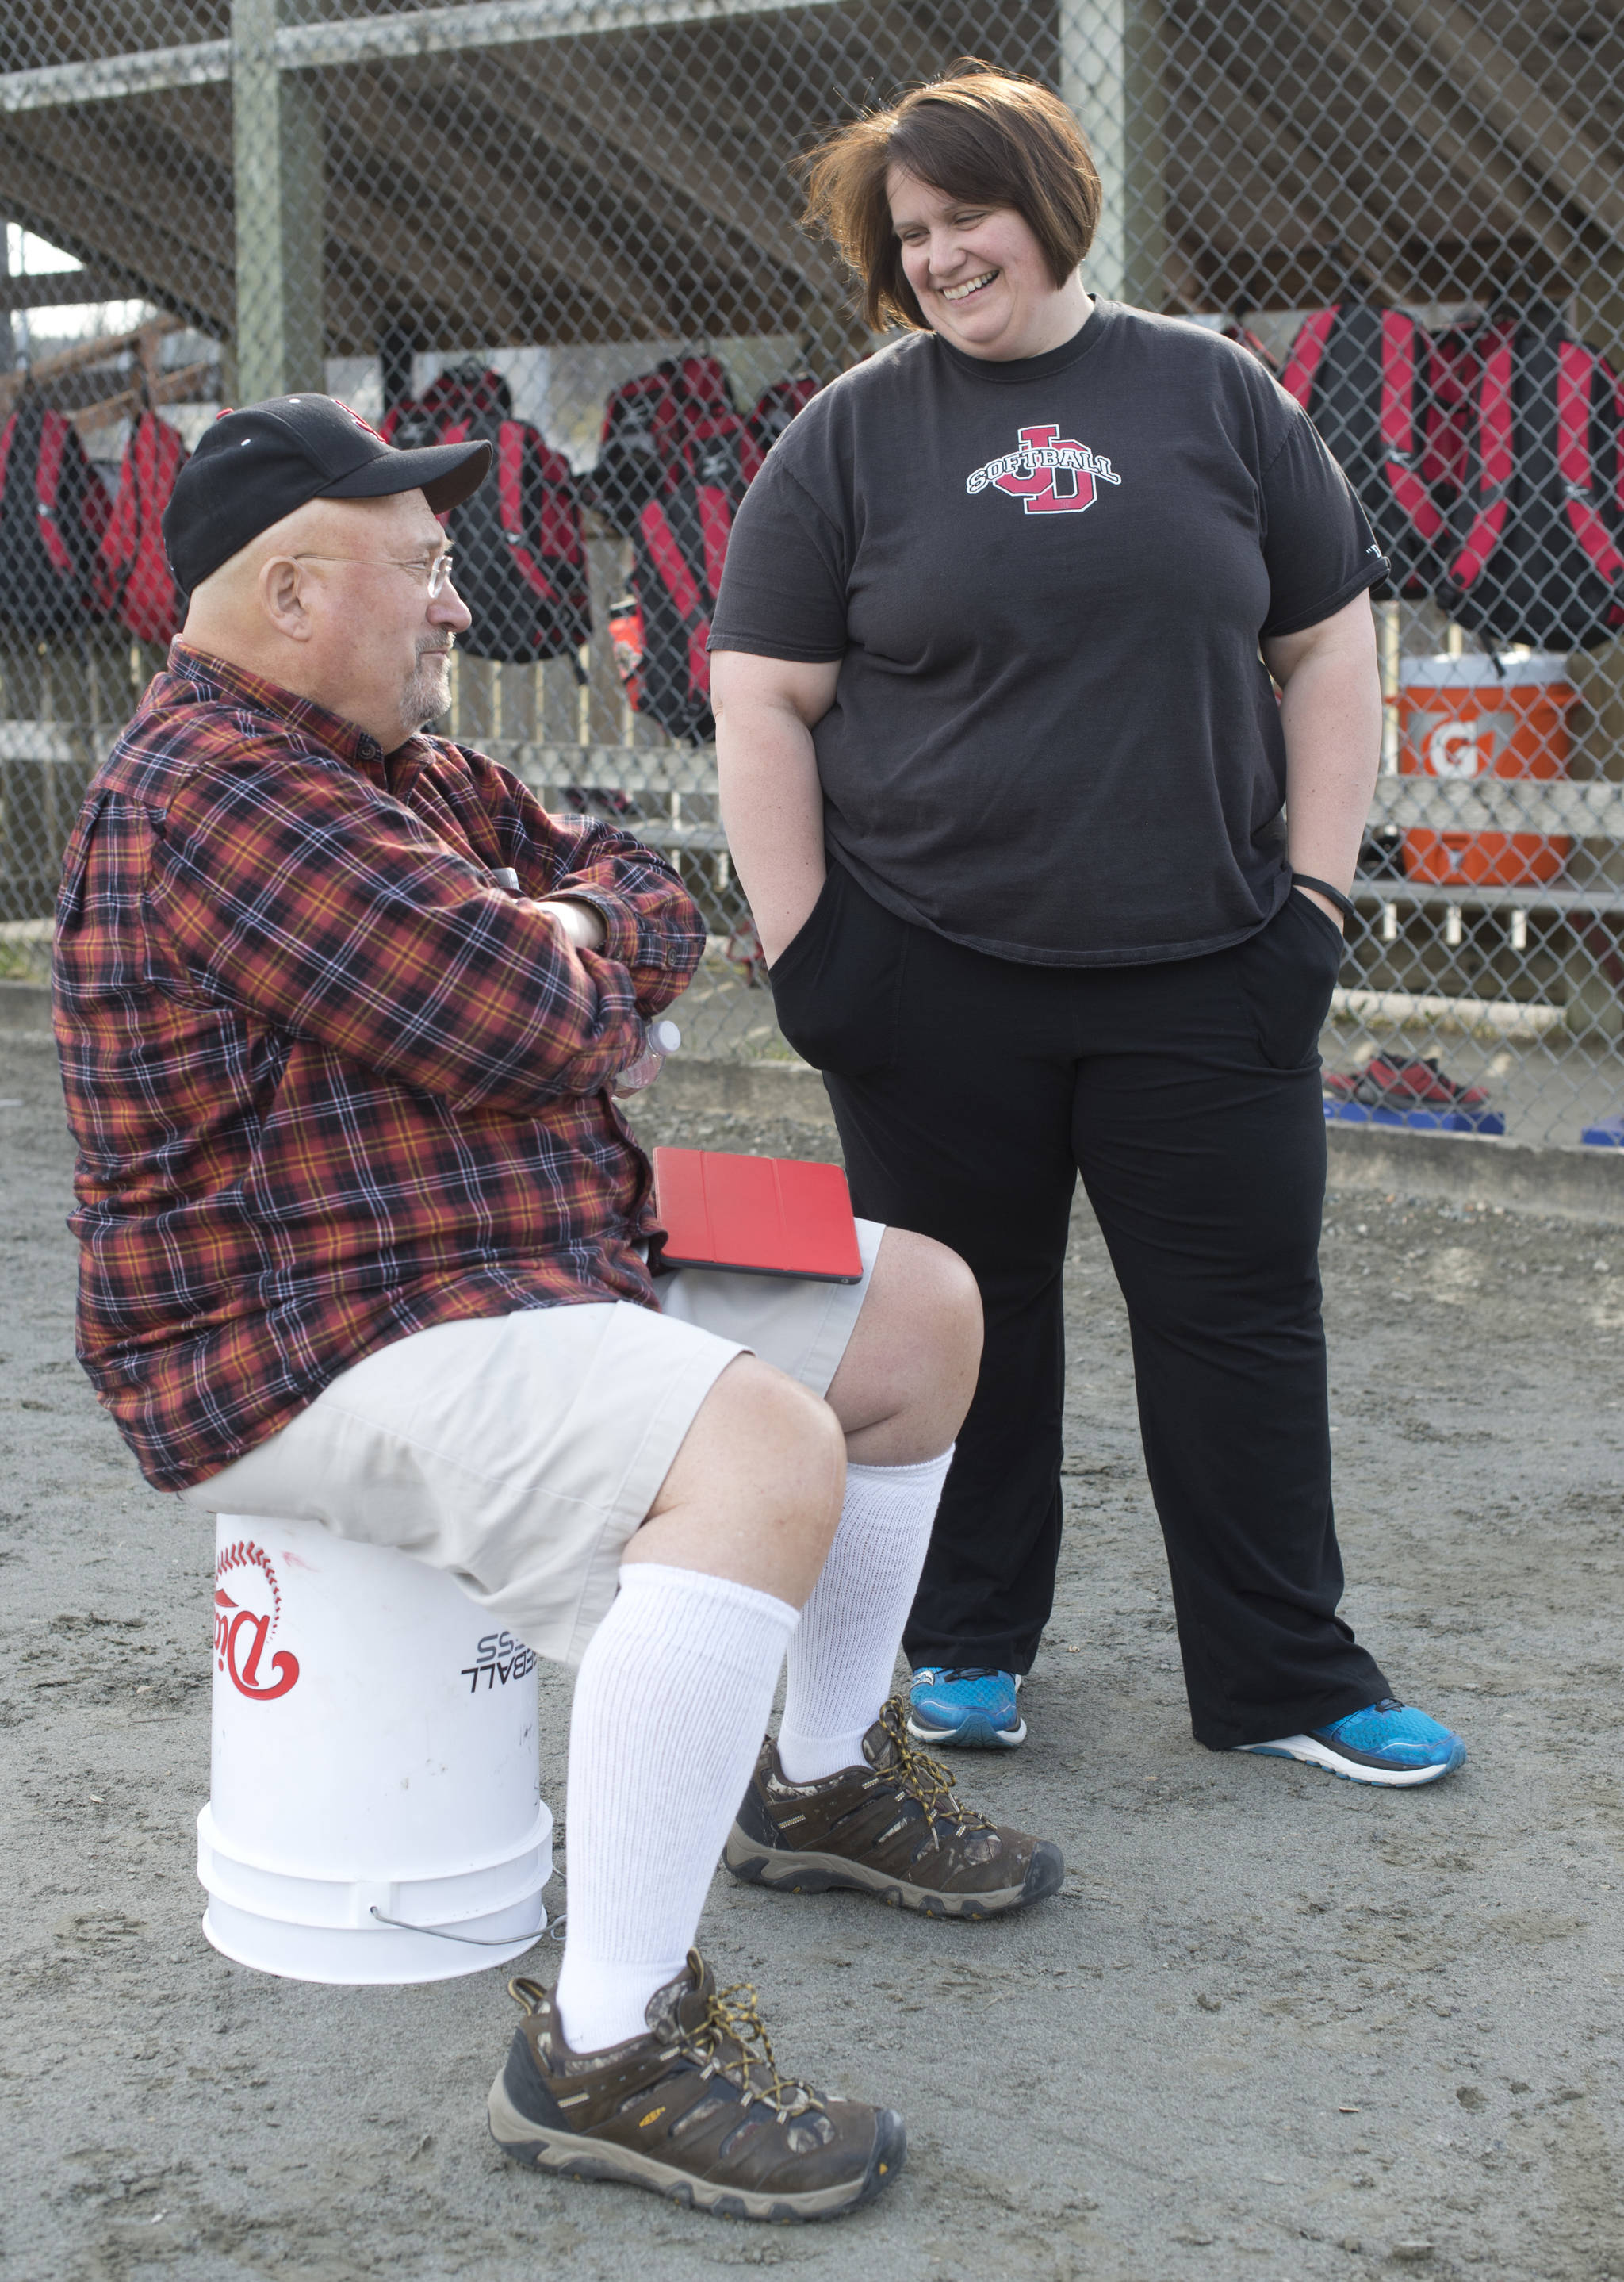 Juneau-Douglas High School girls varsity softball head coach Lexie Razor talks with former head coach Dave Massey during practice at Melvin Park on Tuesday, April 25, 2017. (Michael Penn | Juneau Empire)